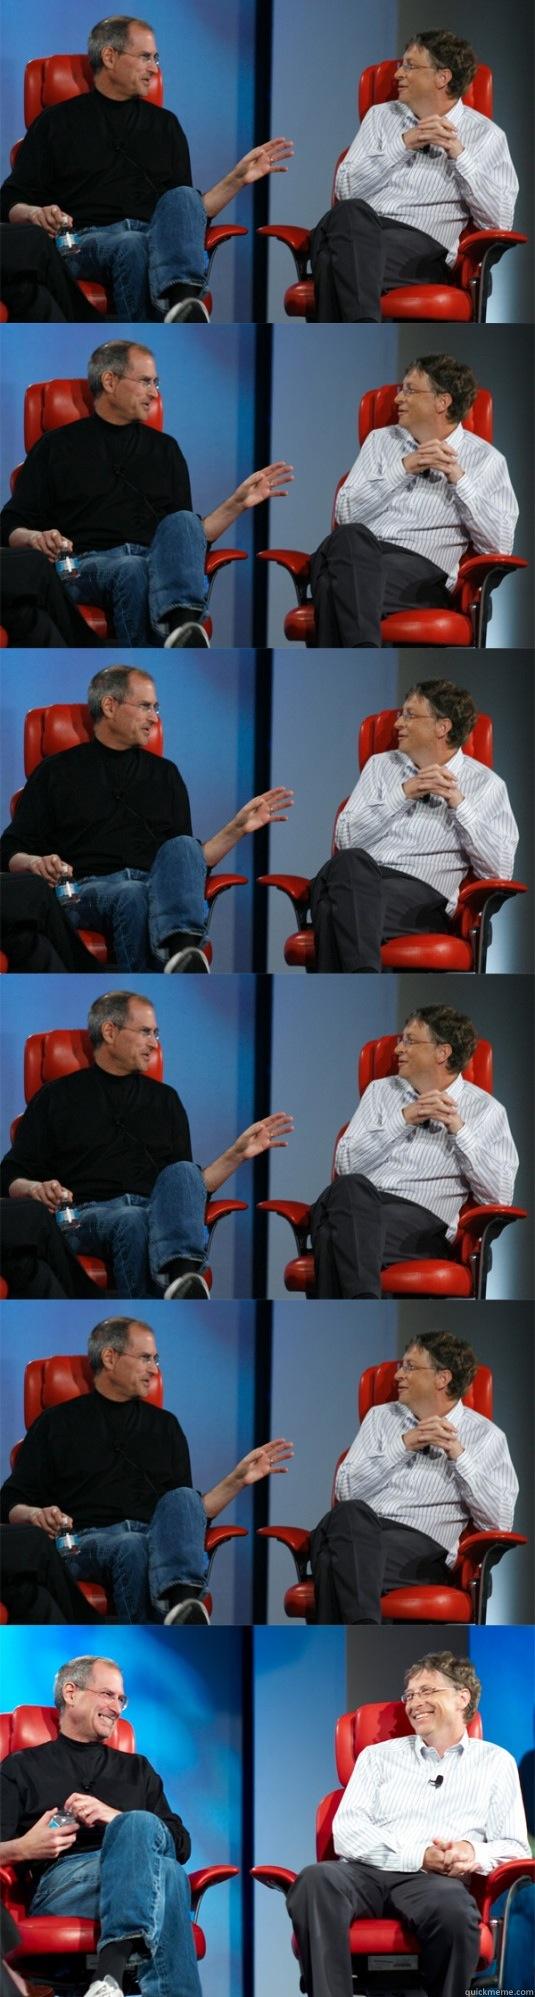   Steve Jobs vs Bill Gates